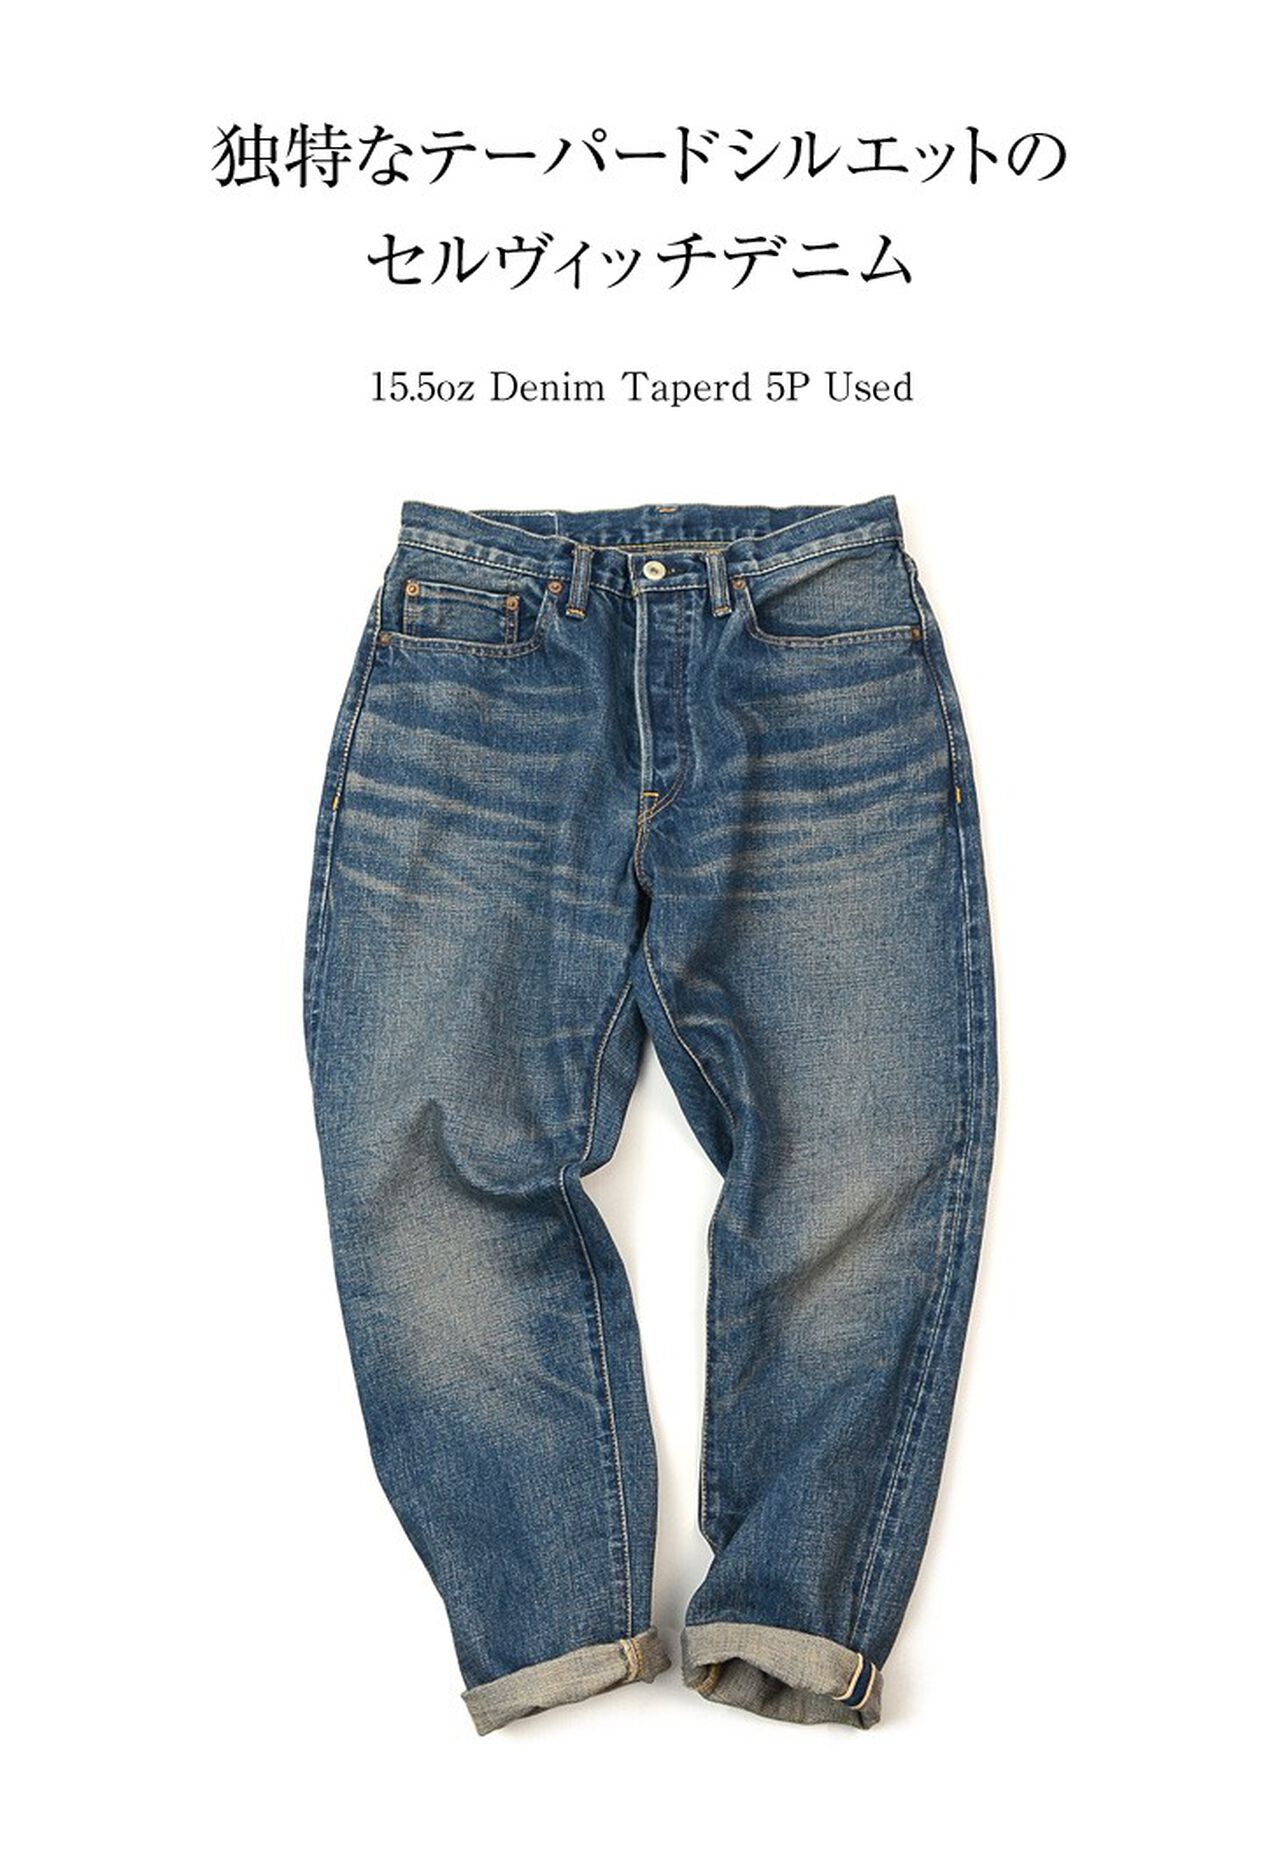 15.5oz Denim Tapered Used 5P Pants,, large image number 1